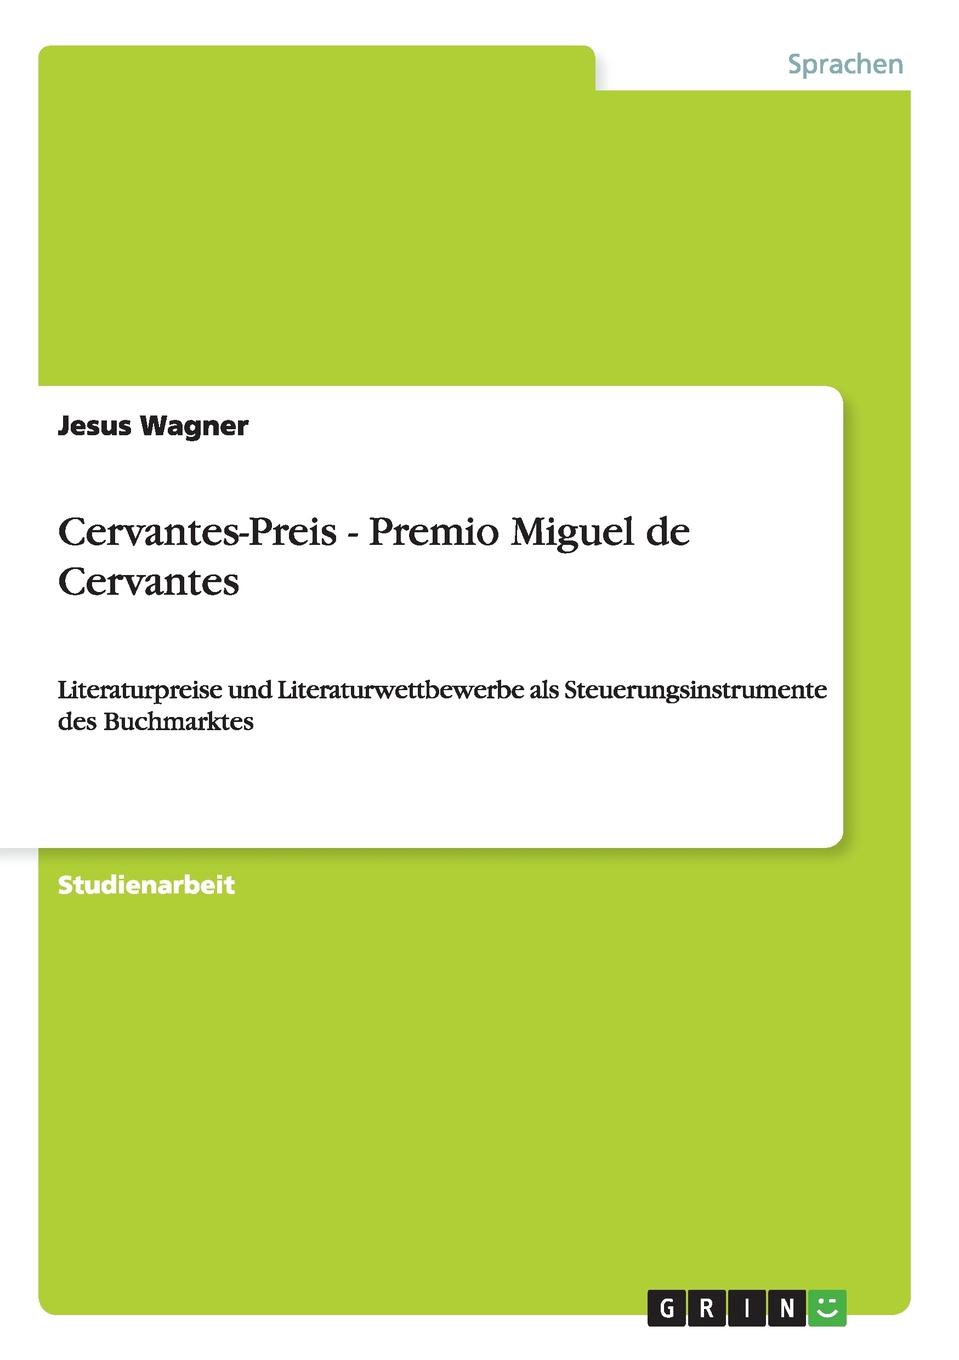 Cervantes-Preis - Premio Miguel de Cervantes